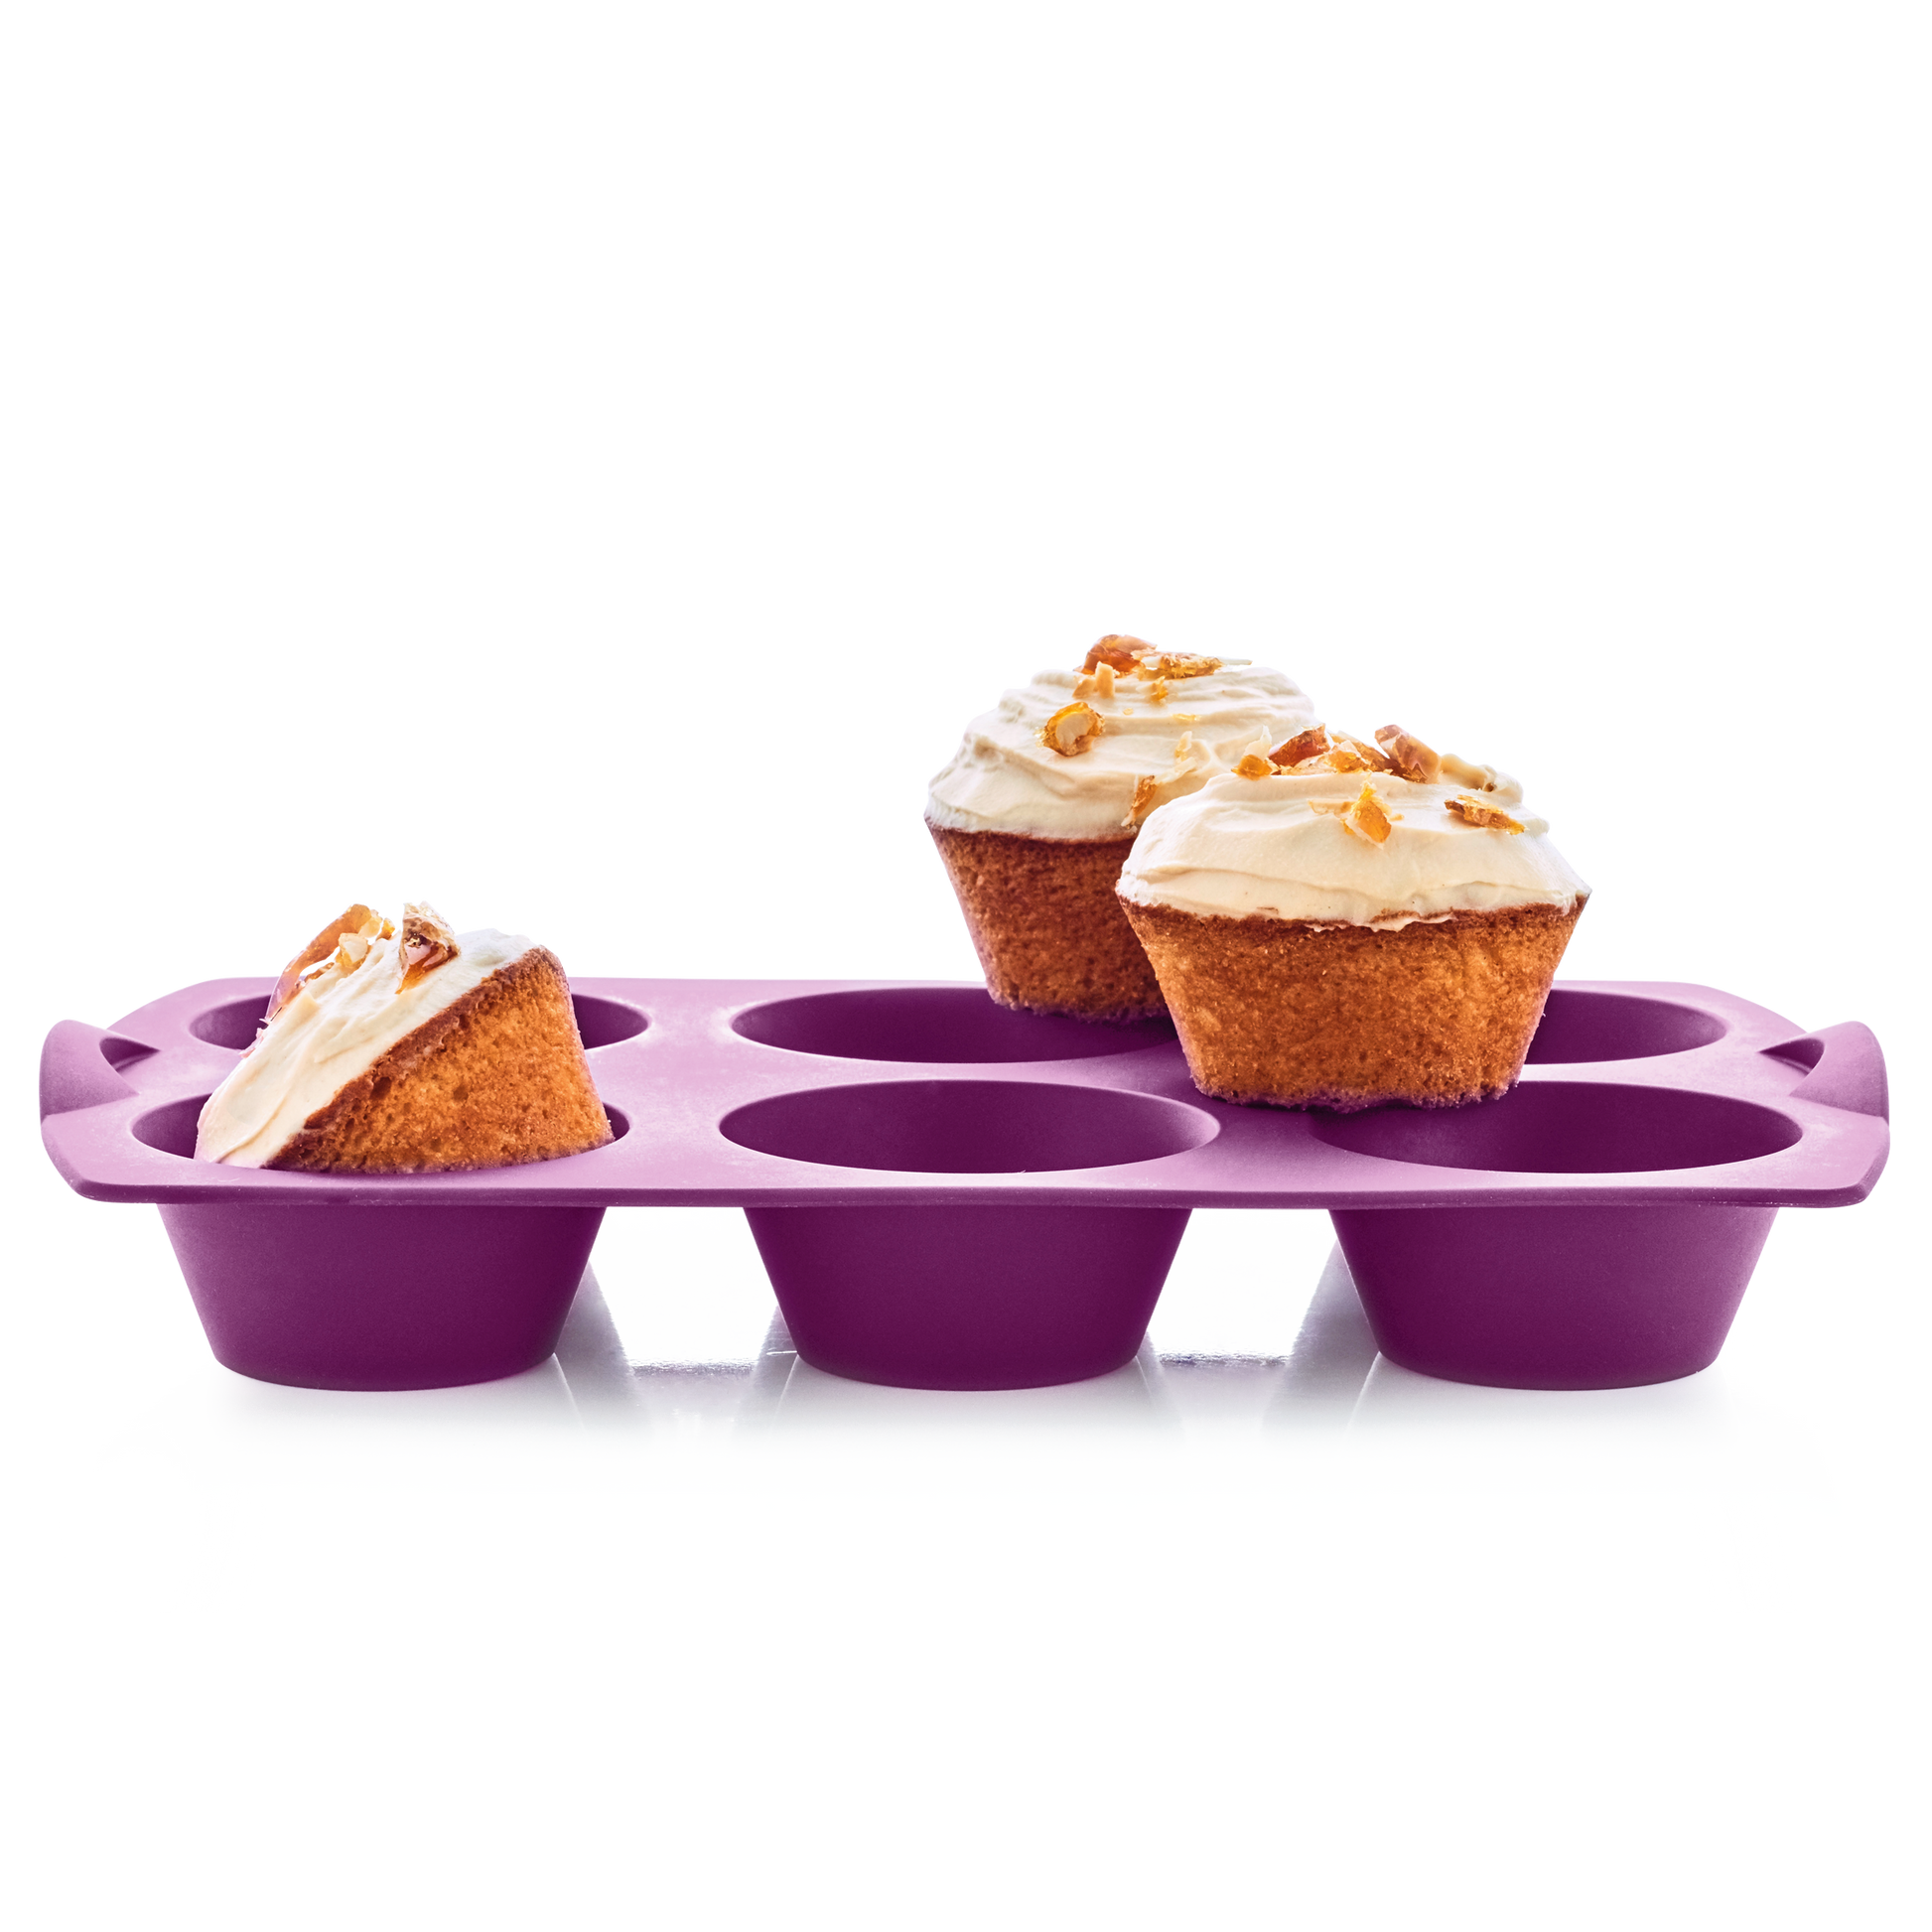 Tupperware Silicone Muffin Form image 5